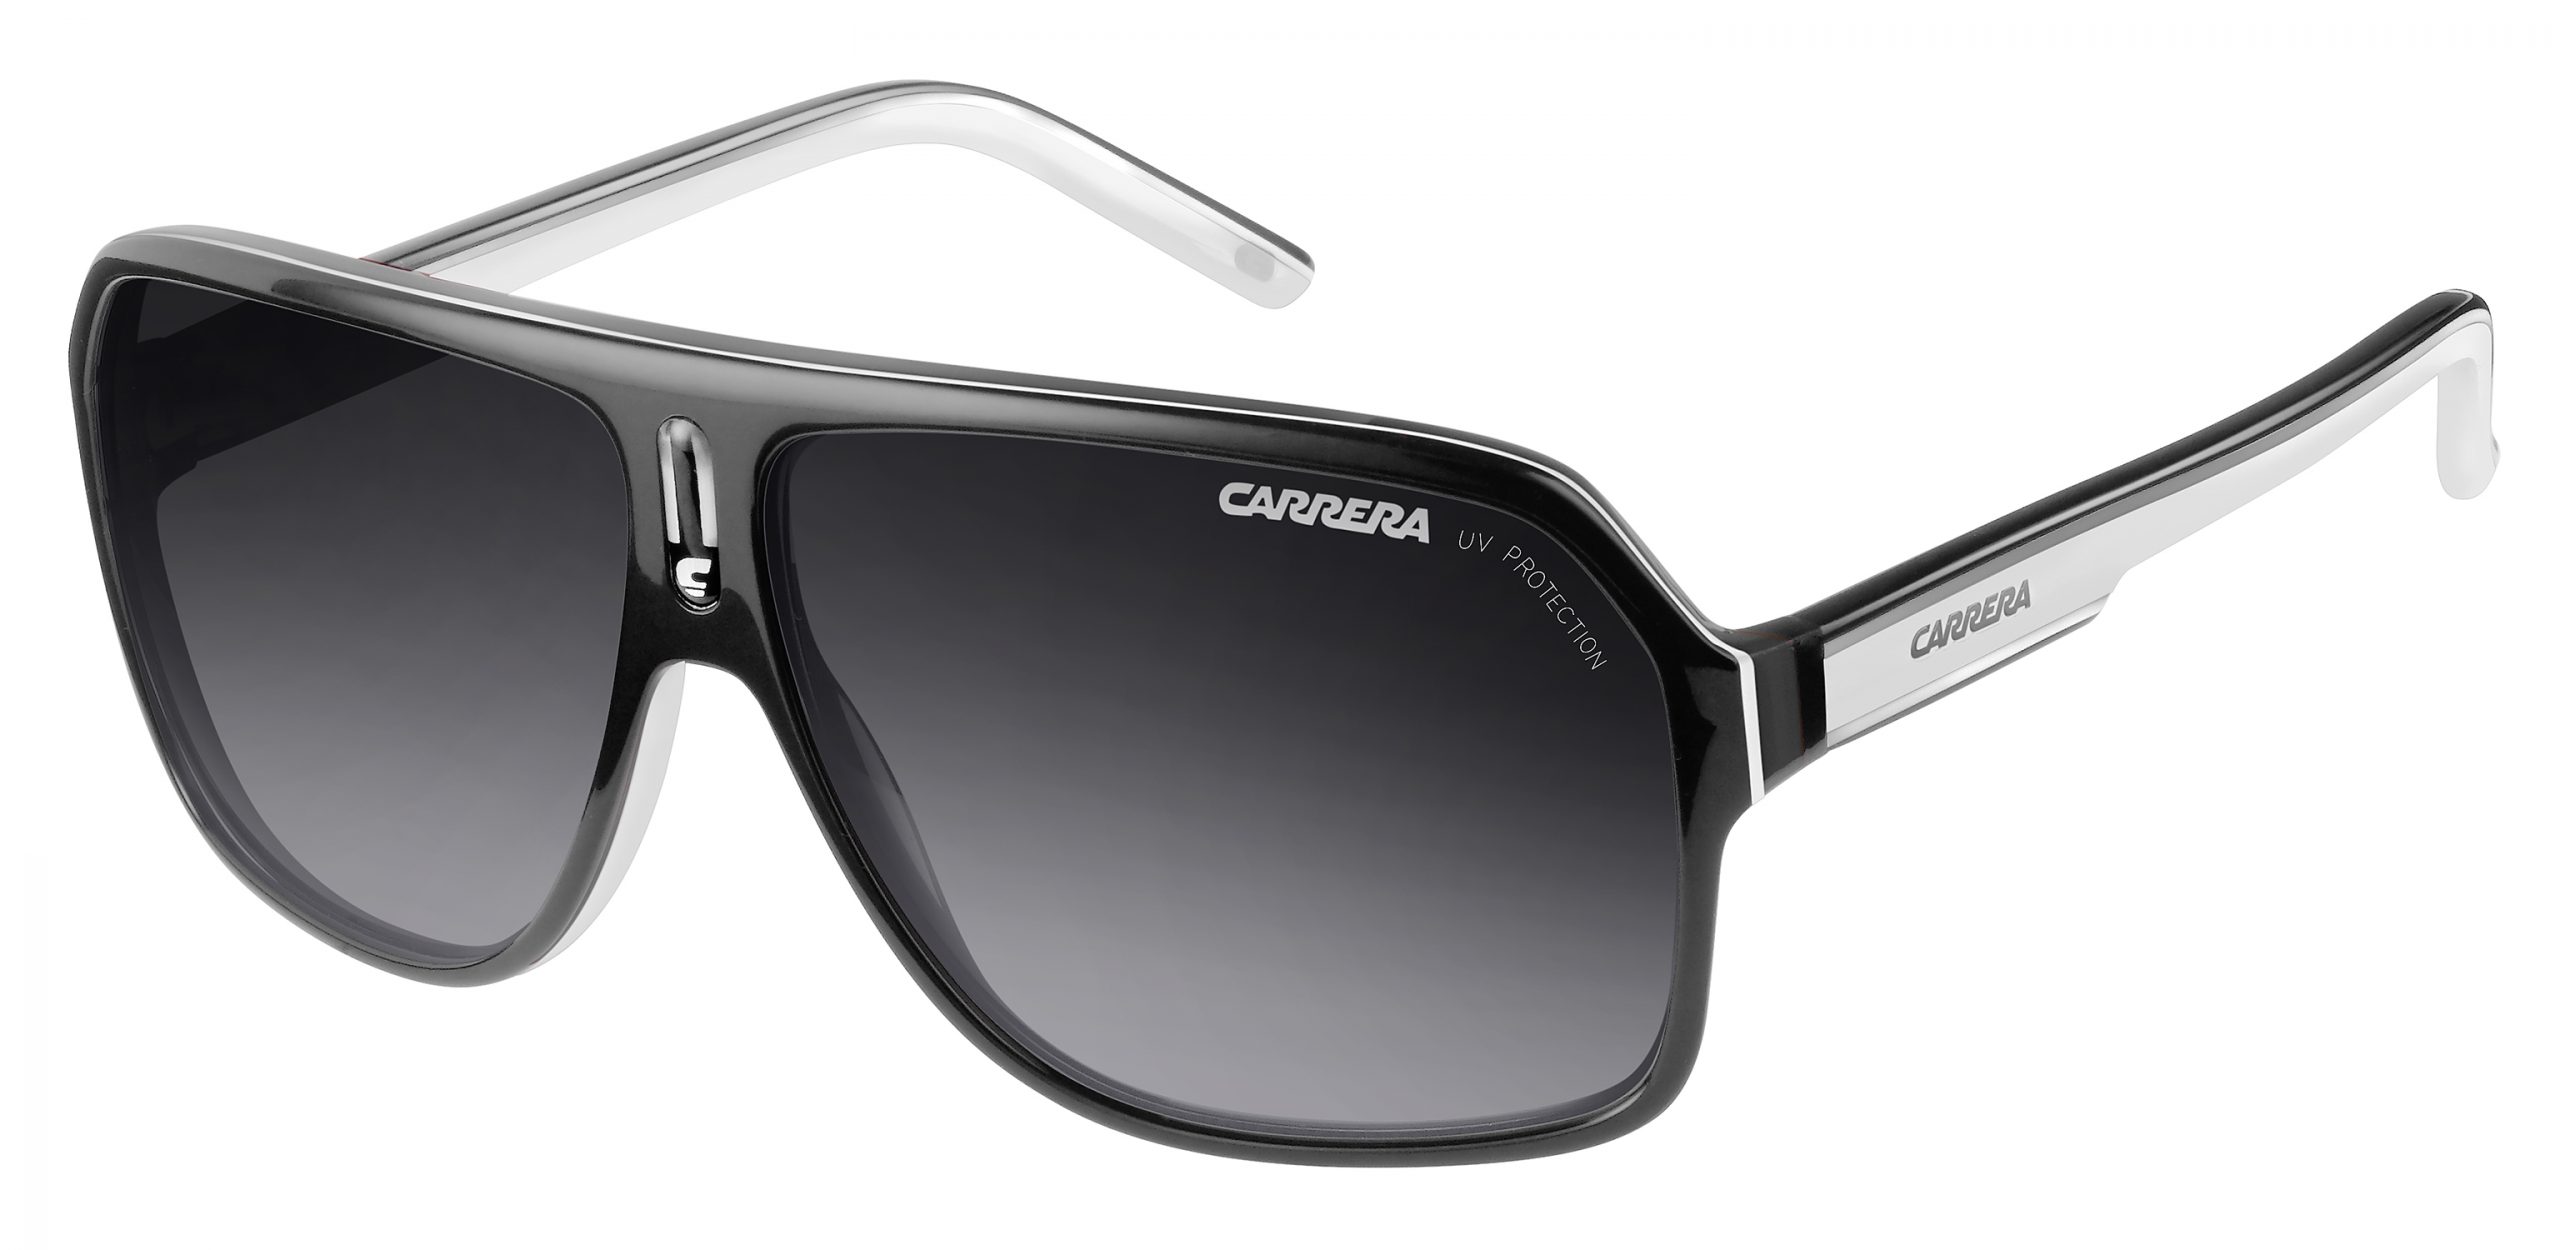 27 XSZ 629O BLKCRYWHIGRY CARRERA Sunglasses | George & Matilda Eyecare and Optometrist